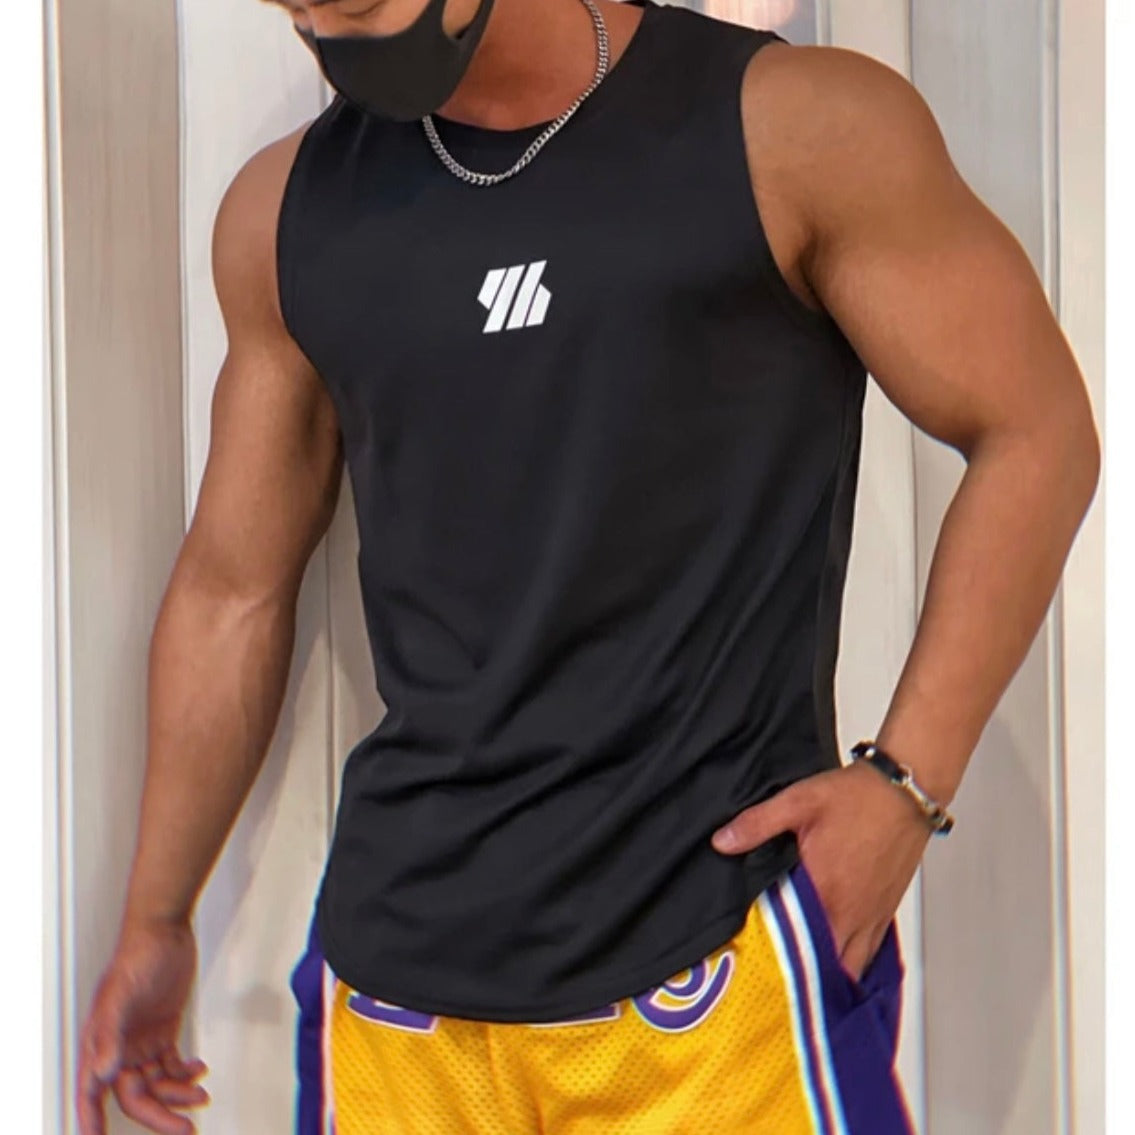 Men's Sleeveless Workout Shirt Tank Top